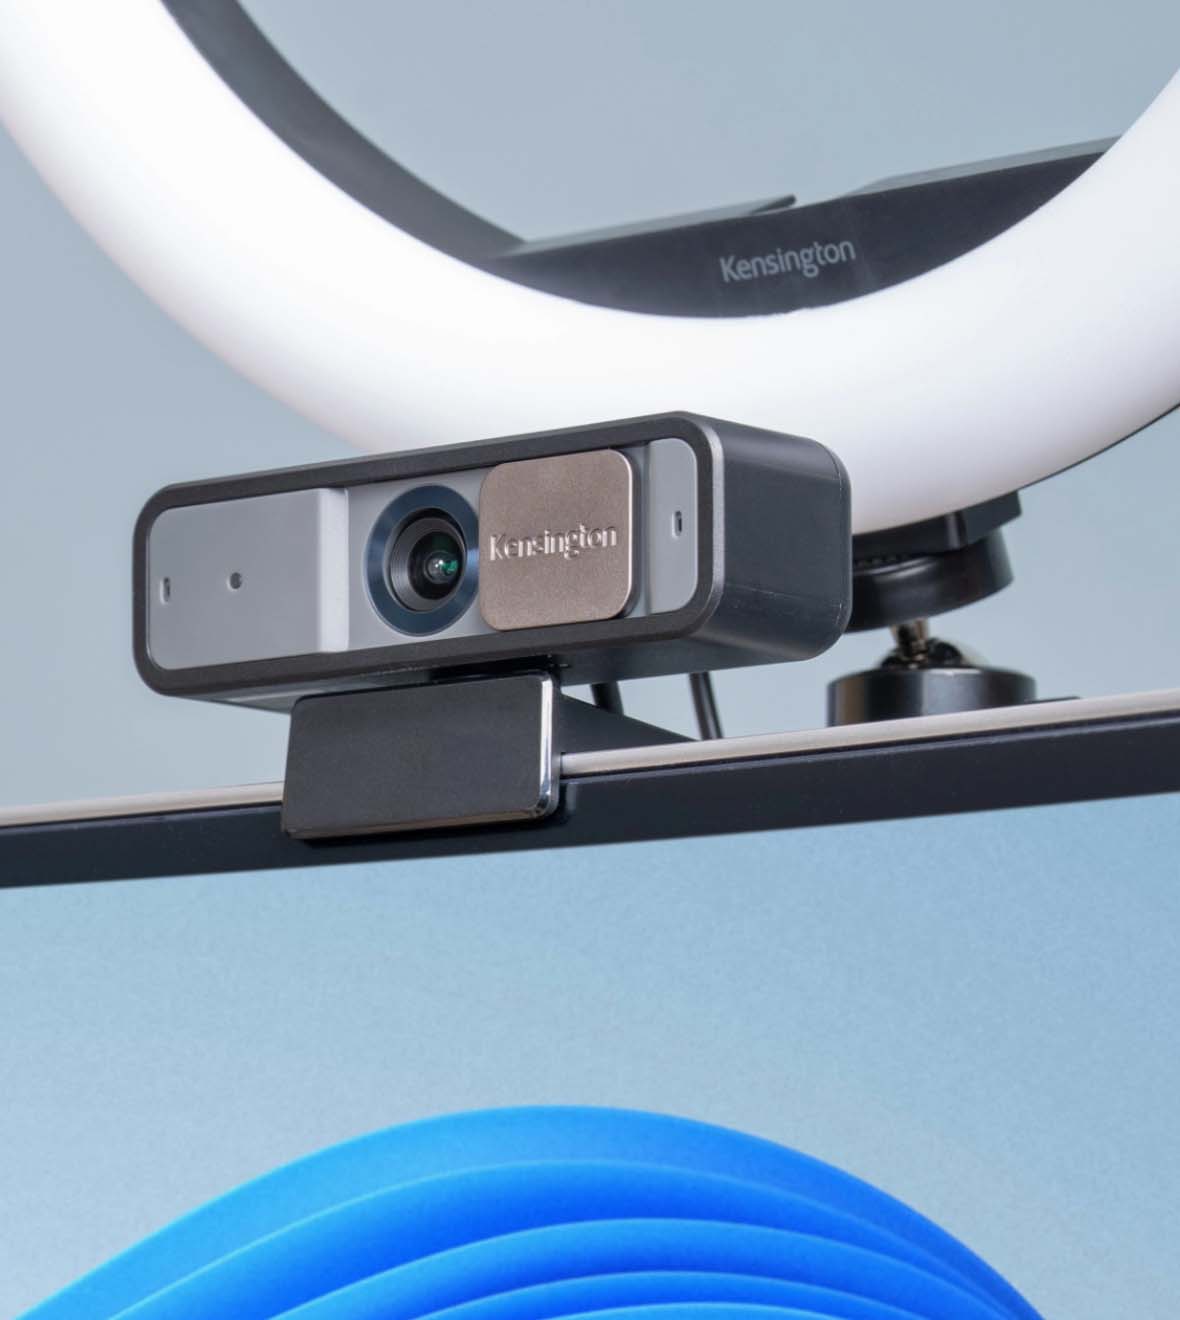 W2050 Pro 1080p Auto Focus Webcam on desk